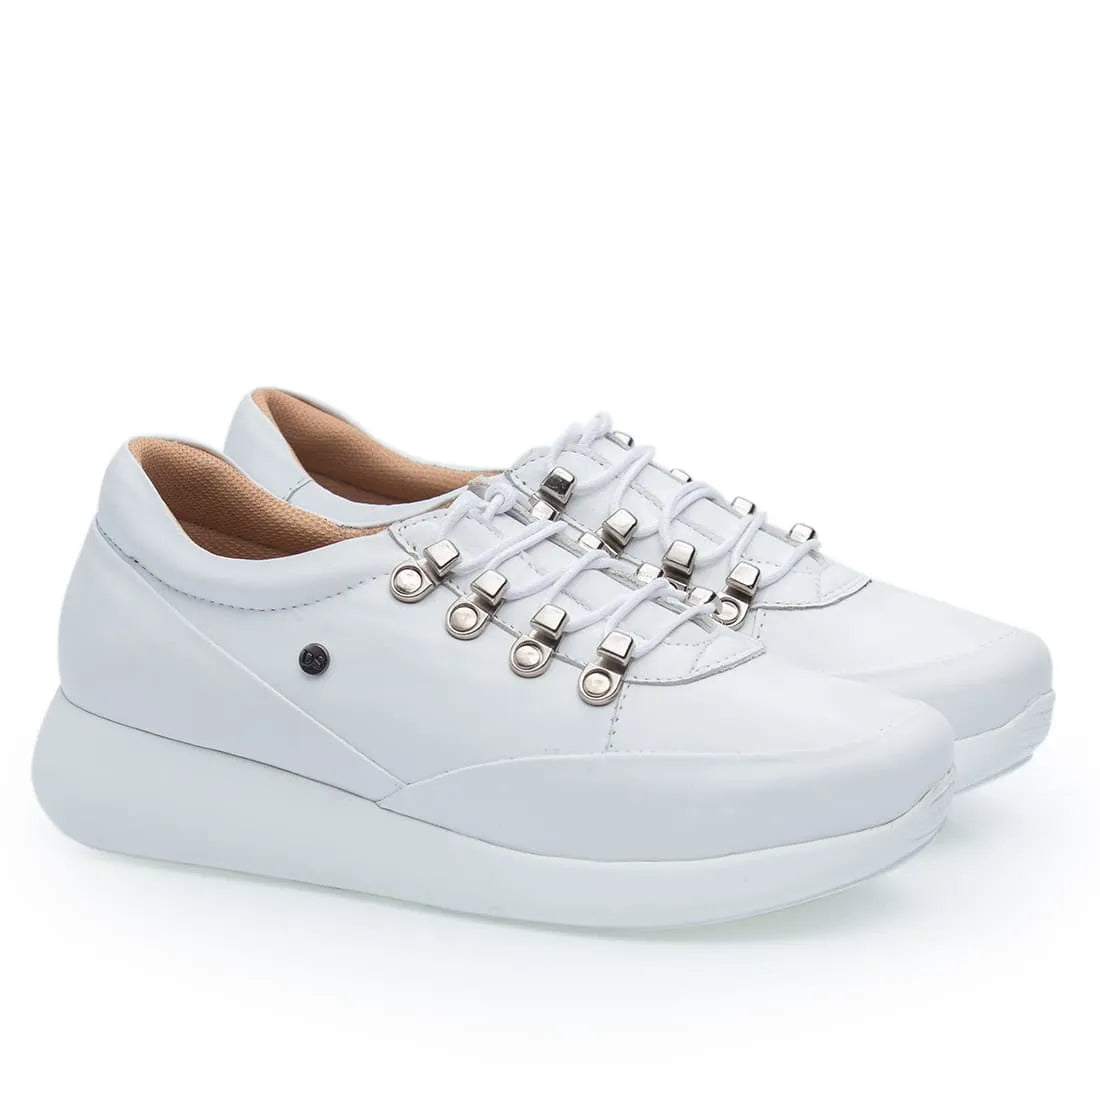 Compre 1 Leve 2 - Tênis Doctor Shoes Couro 1401 Branco Ortopédico